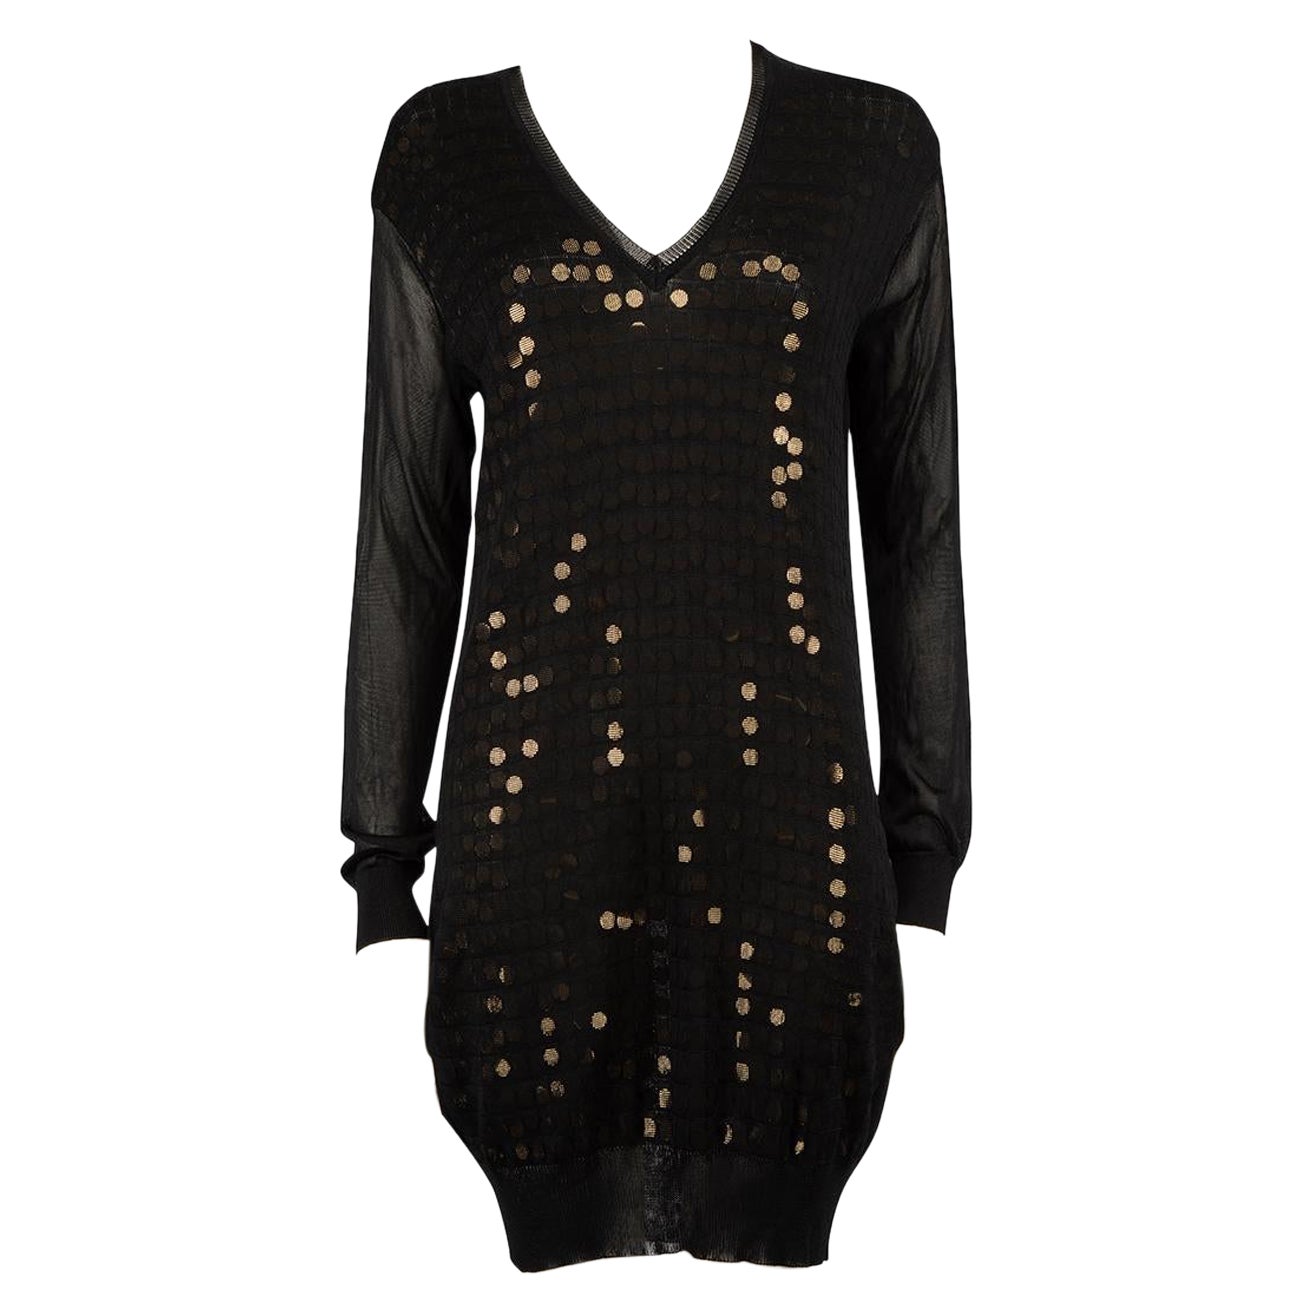 Stella McCartney Black Sequin Knit Jumper Dress Size S For Sale